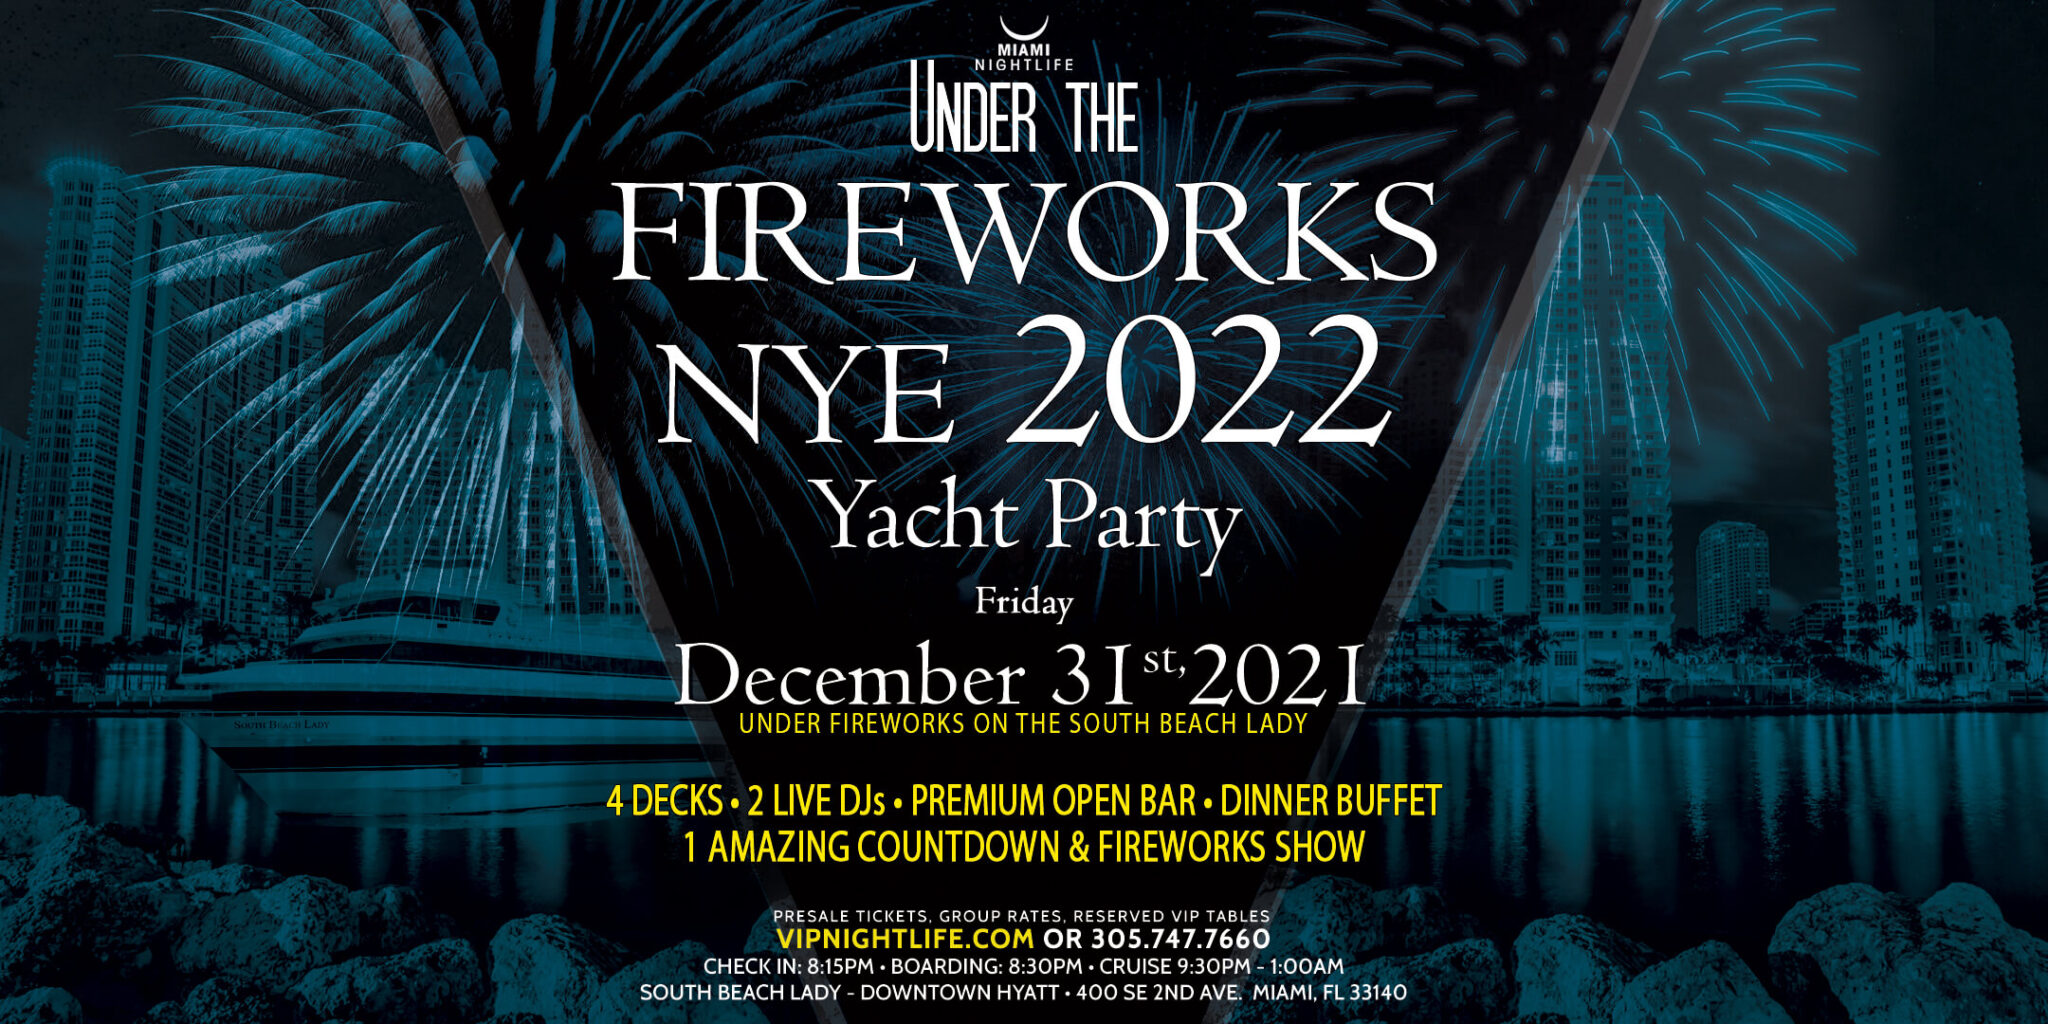 New Year's Eve 2022 Miami Fireworks Party Cruise Seafair Mega Yacht